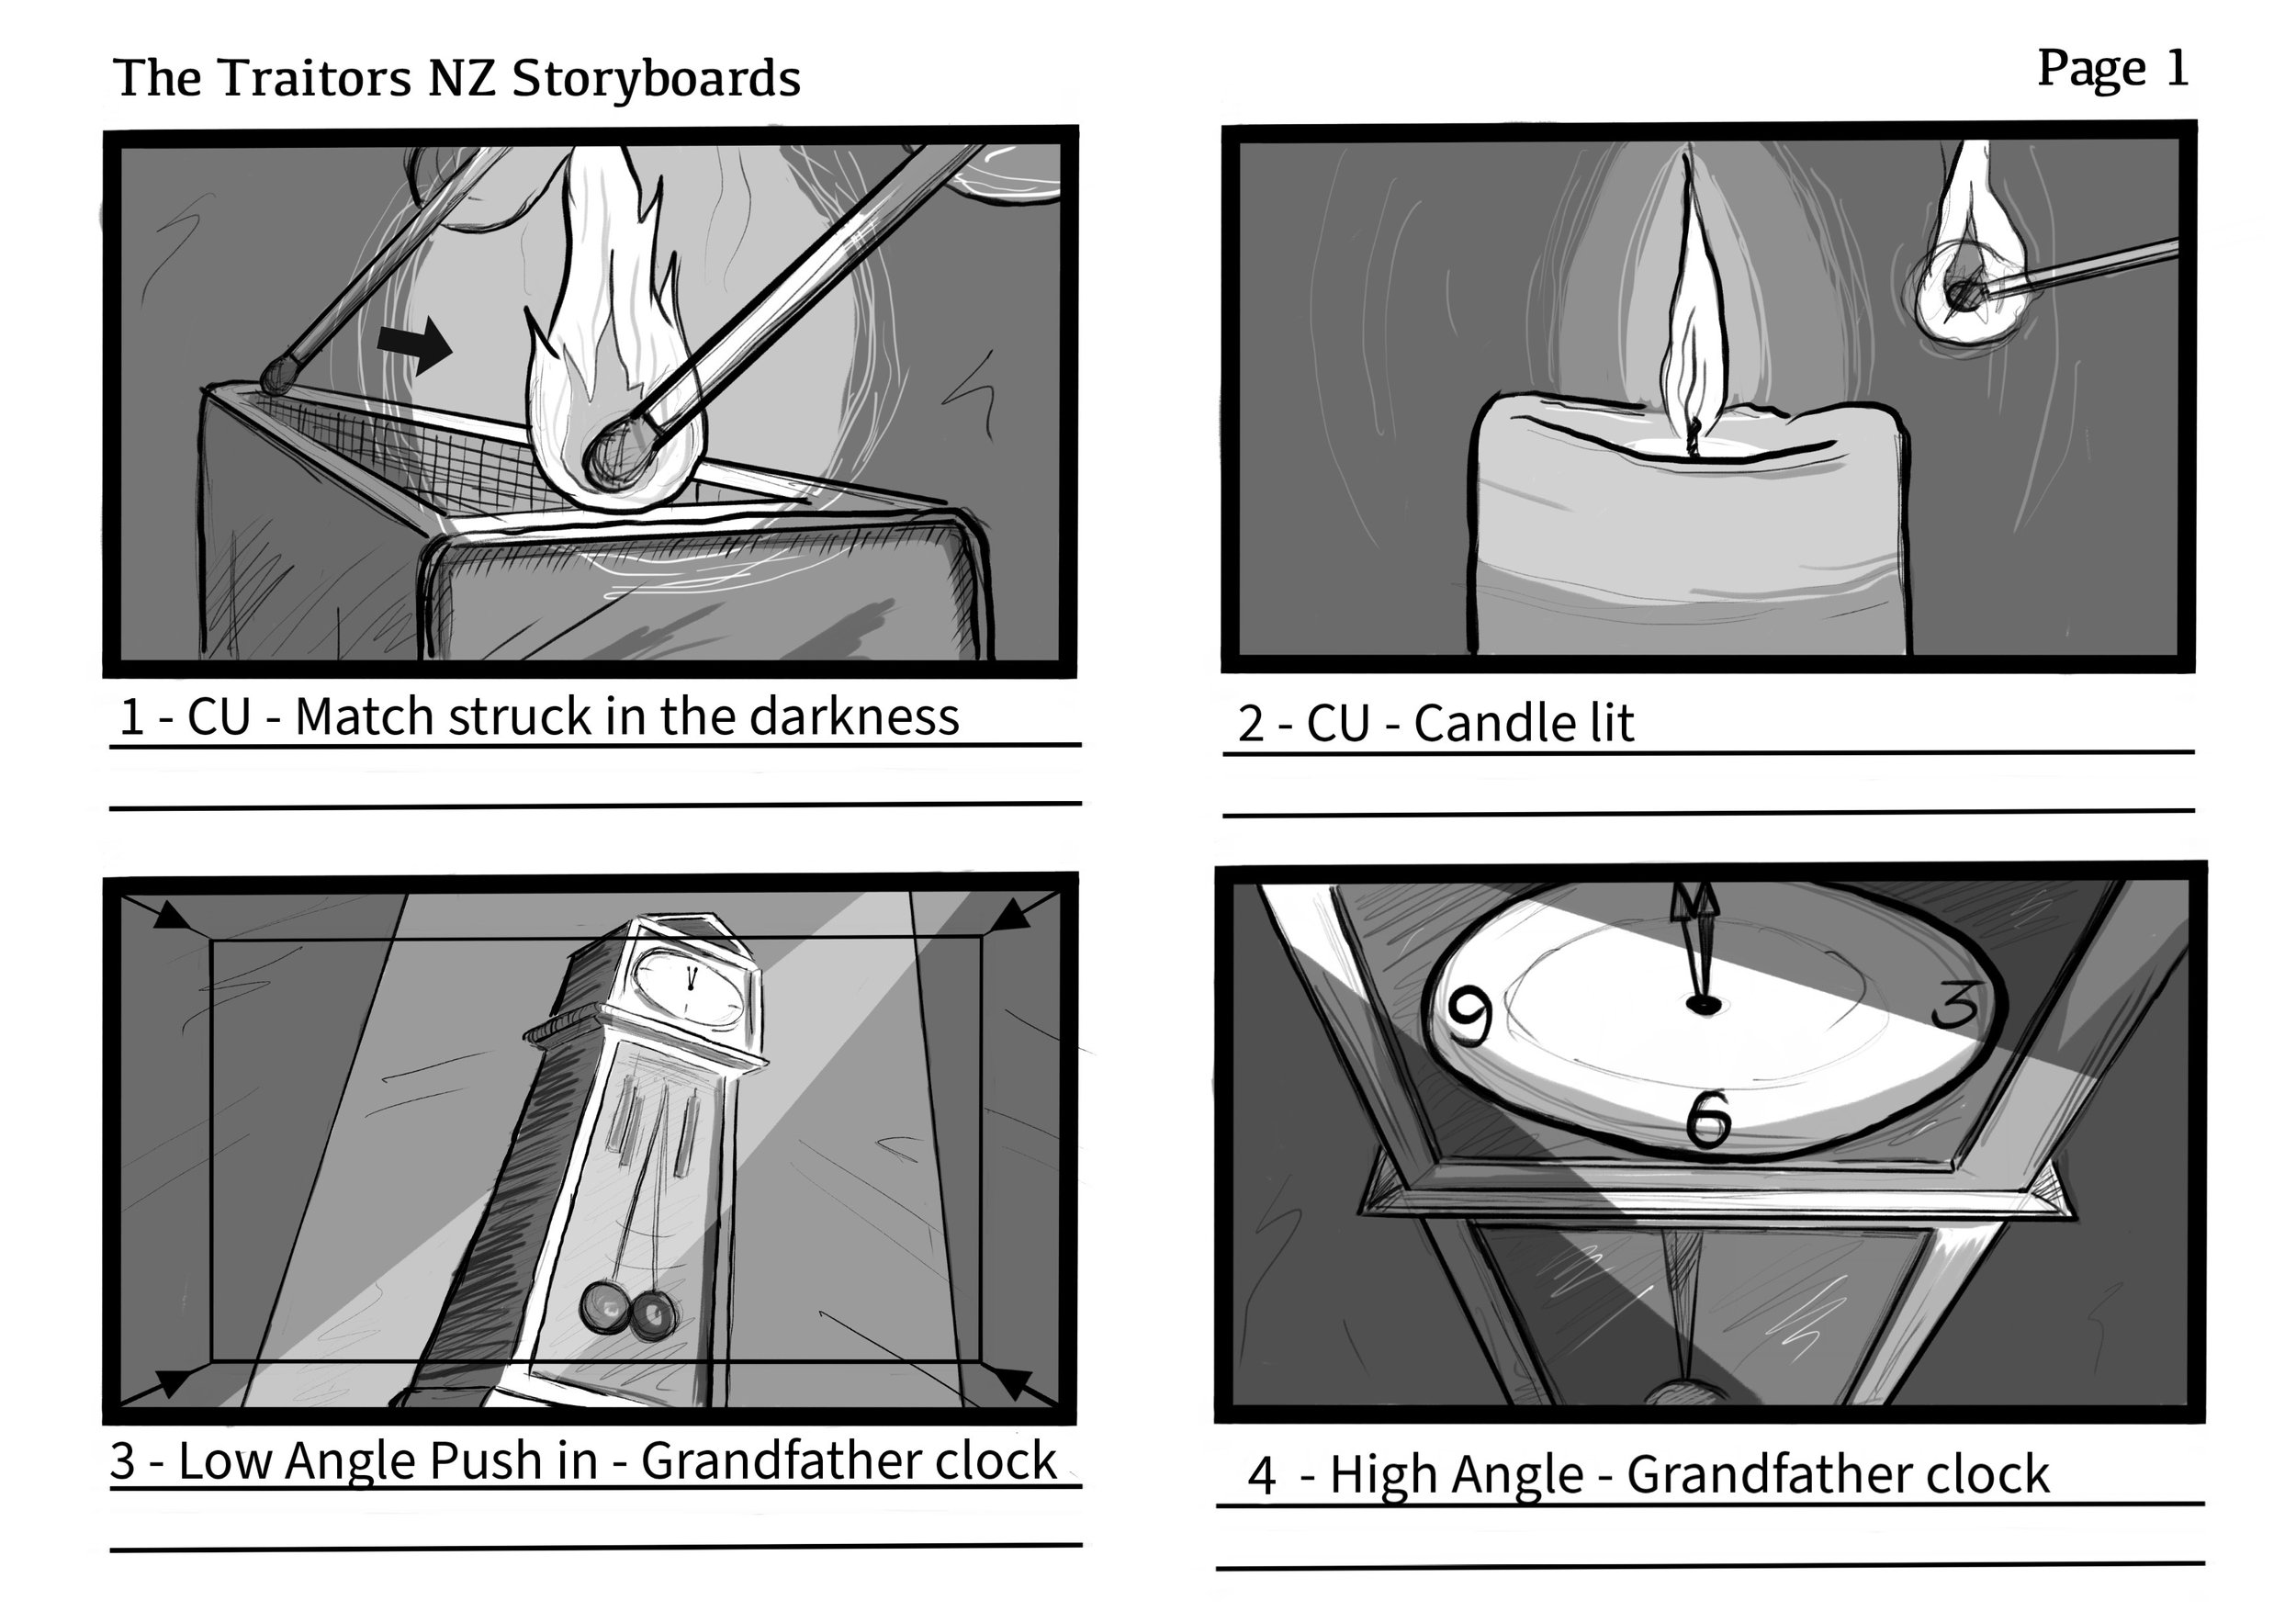 TRAITORS NZ STORYBOARD -page1.jpg